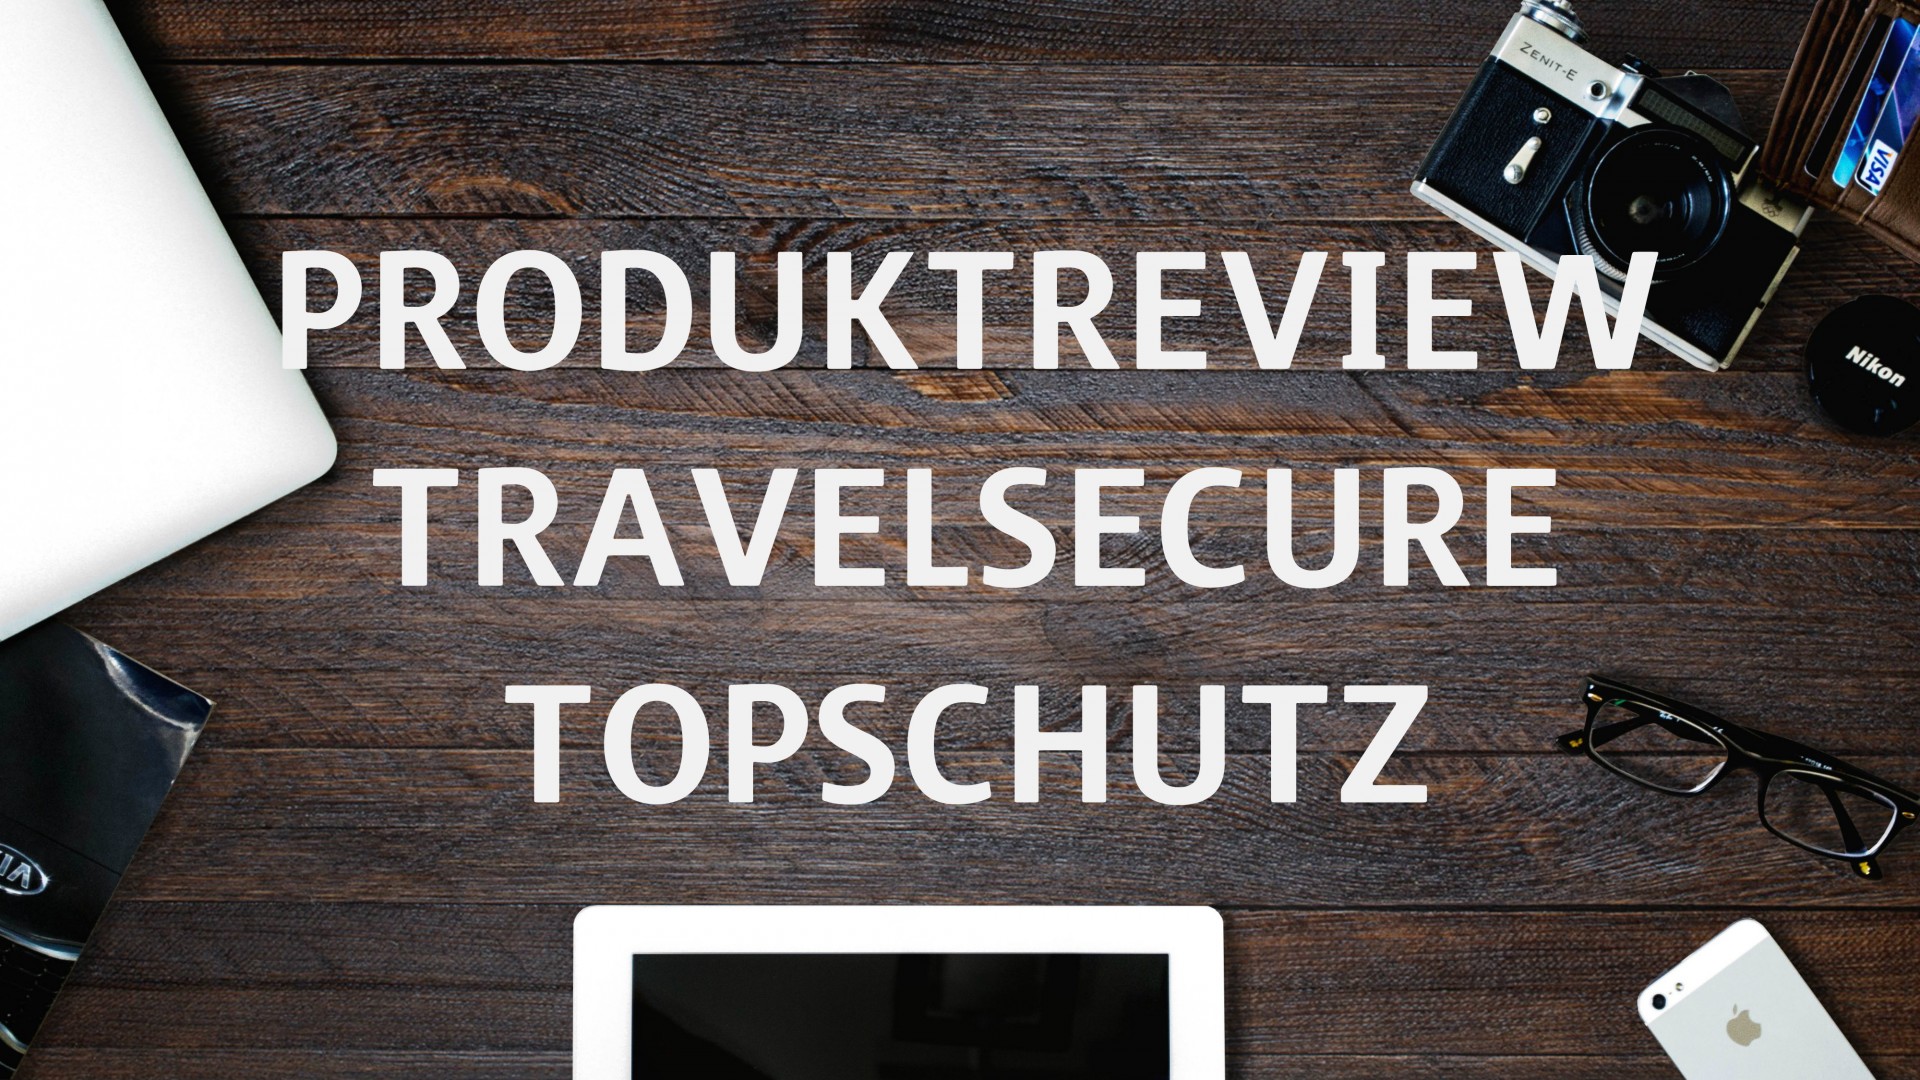 Produktreview Topschutz Travelsecure Covomo Magazin